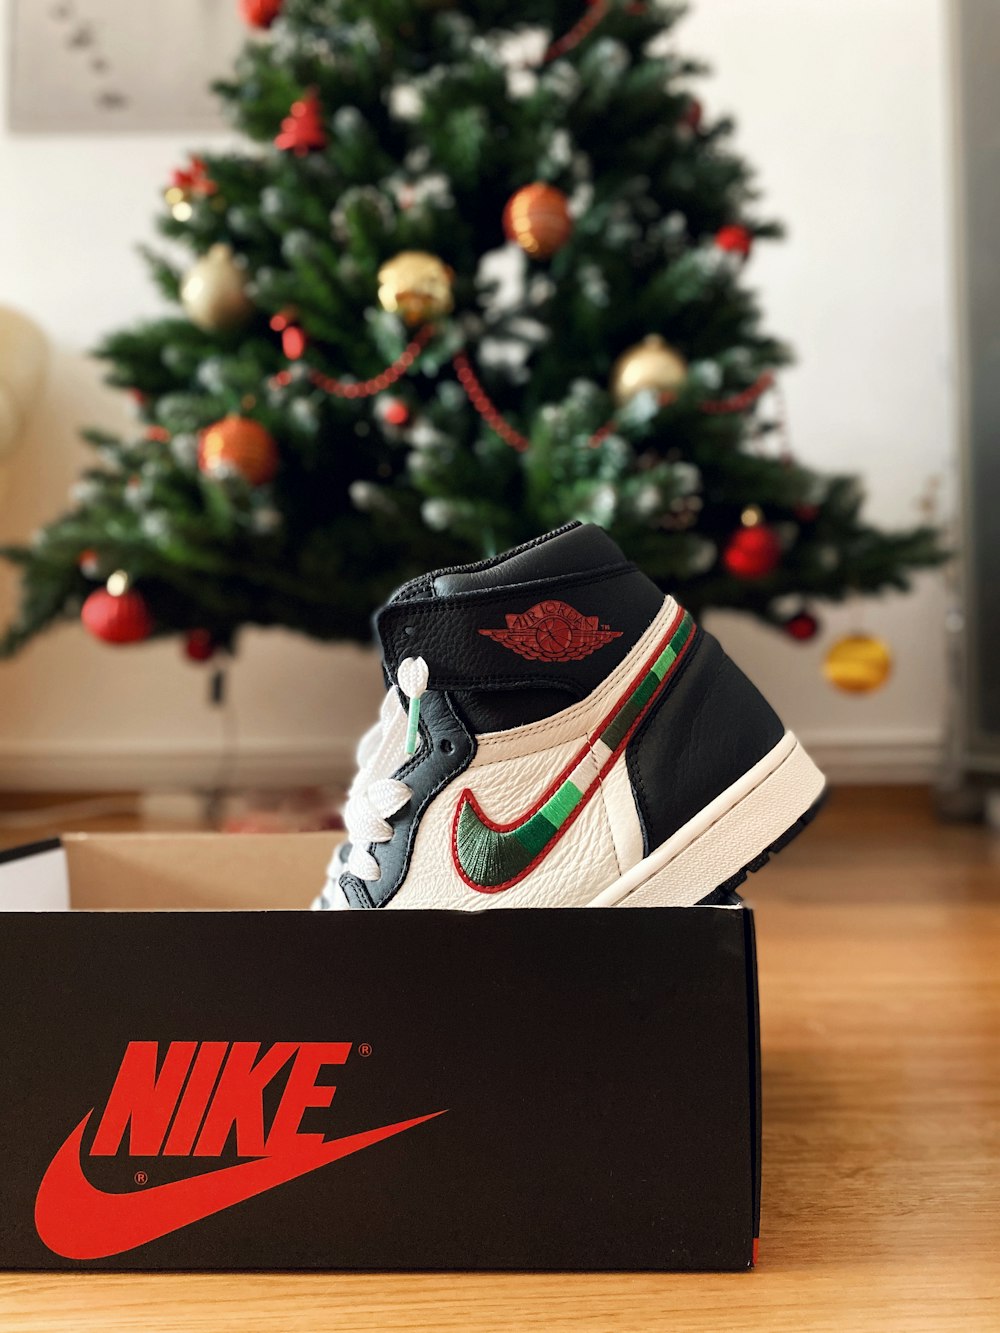 Nike high-top shoe in box near Christmas tree photo – Free Romania Image on  Unsplash